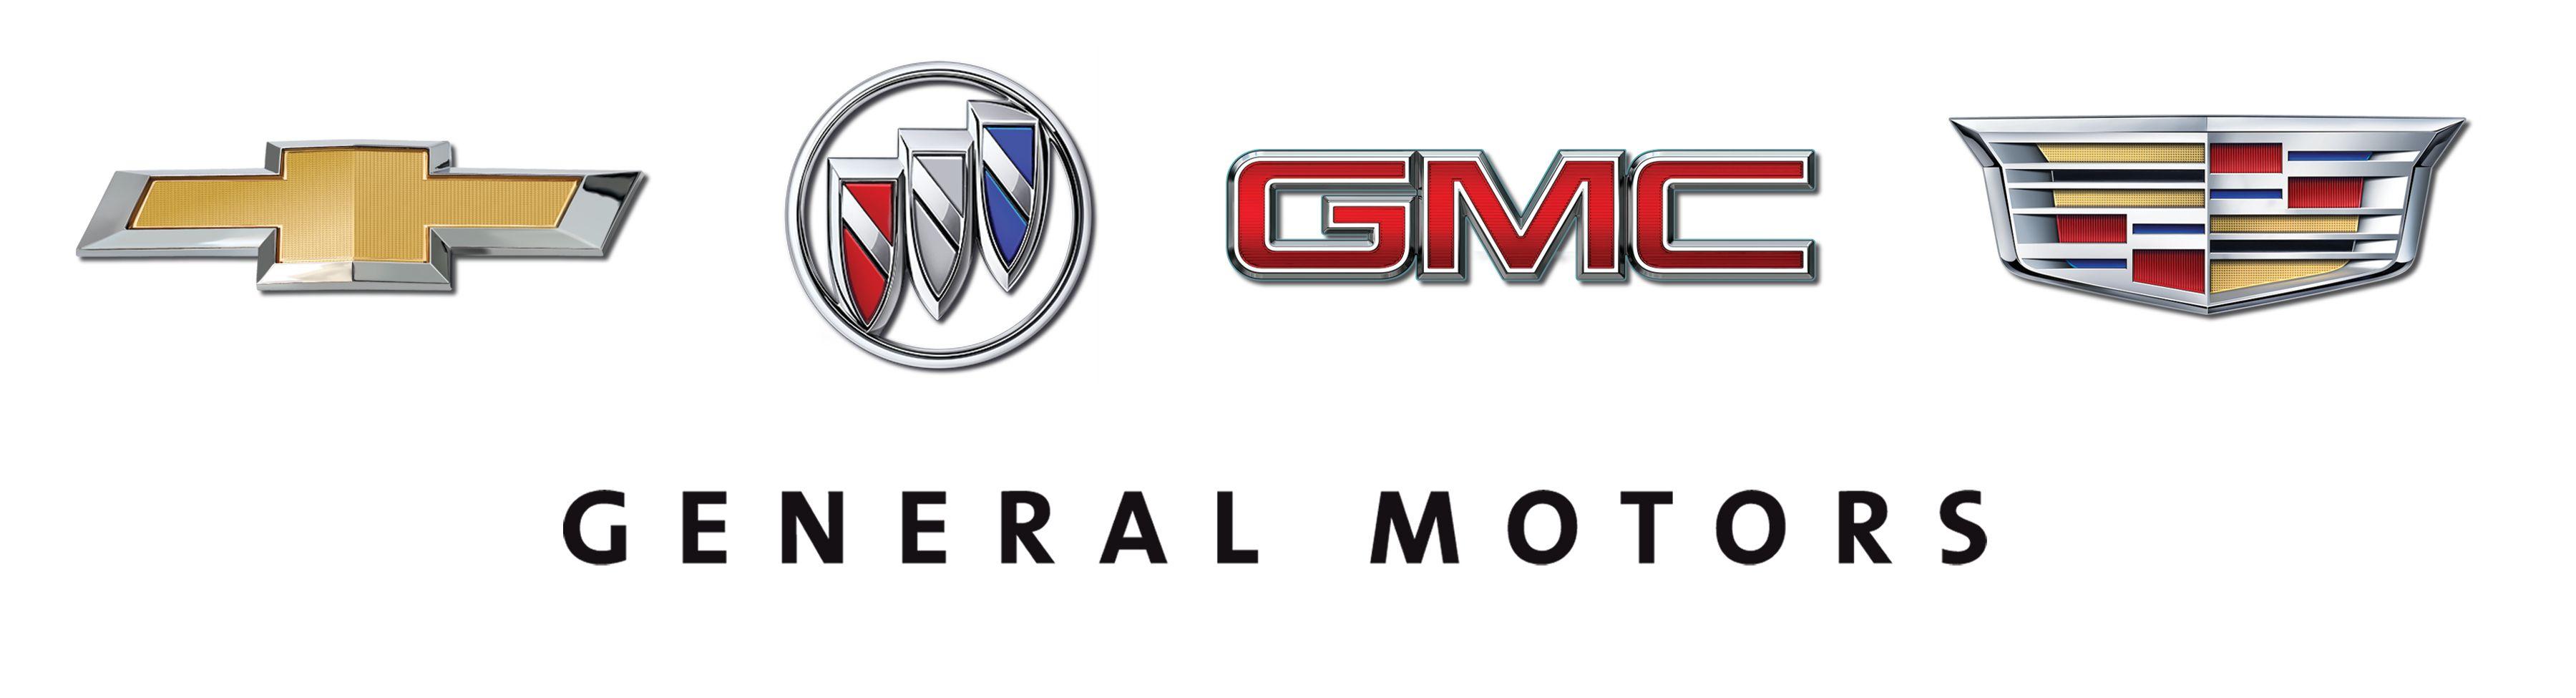 GMC Company Logo - GM Corporate Newsroom